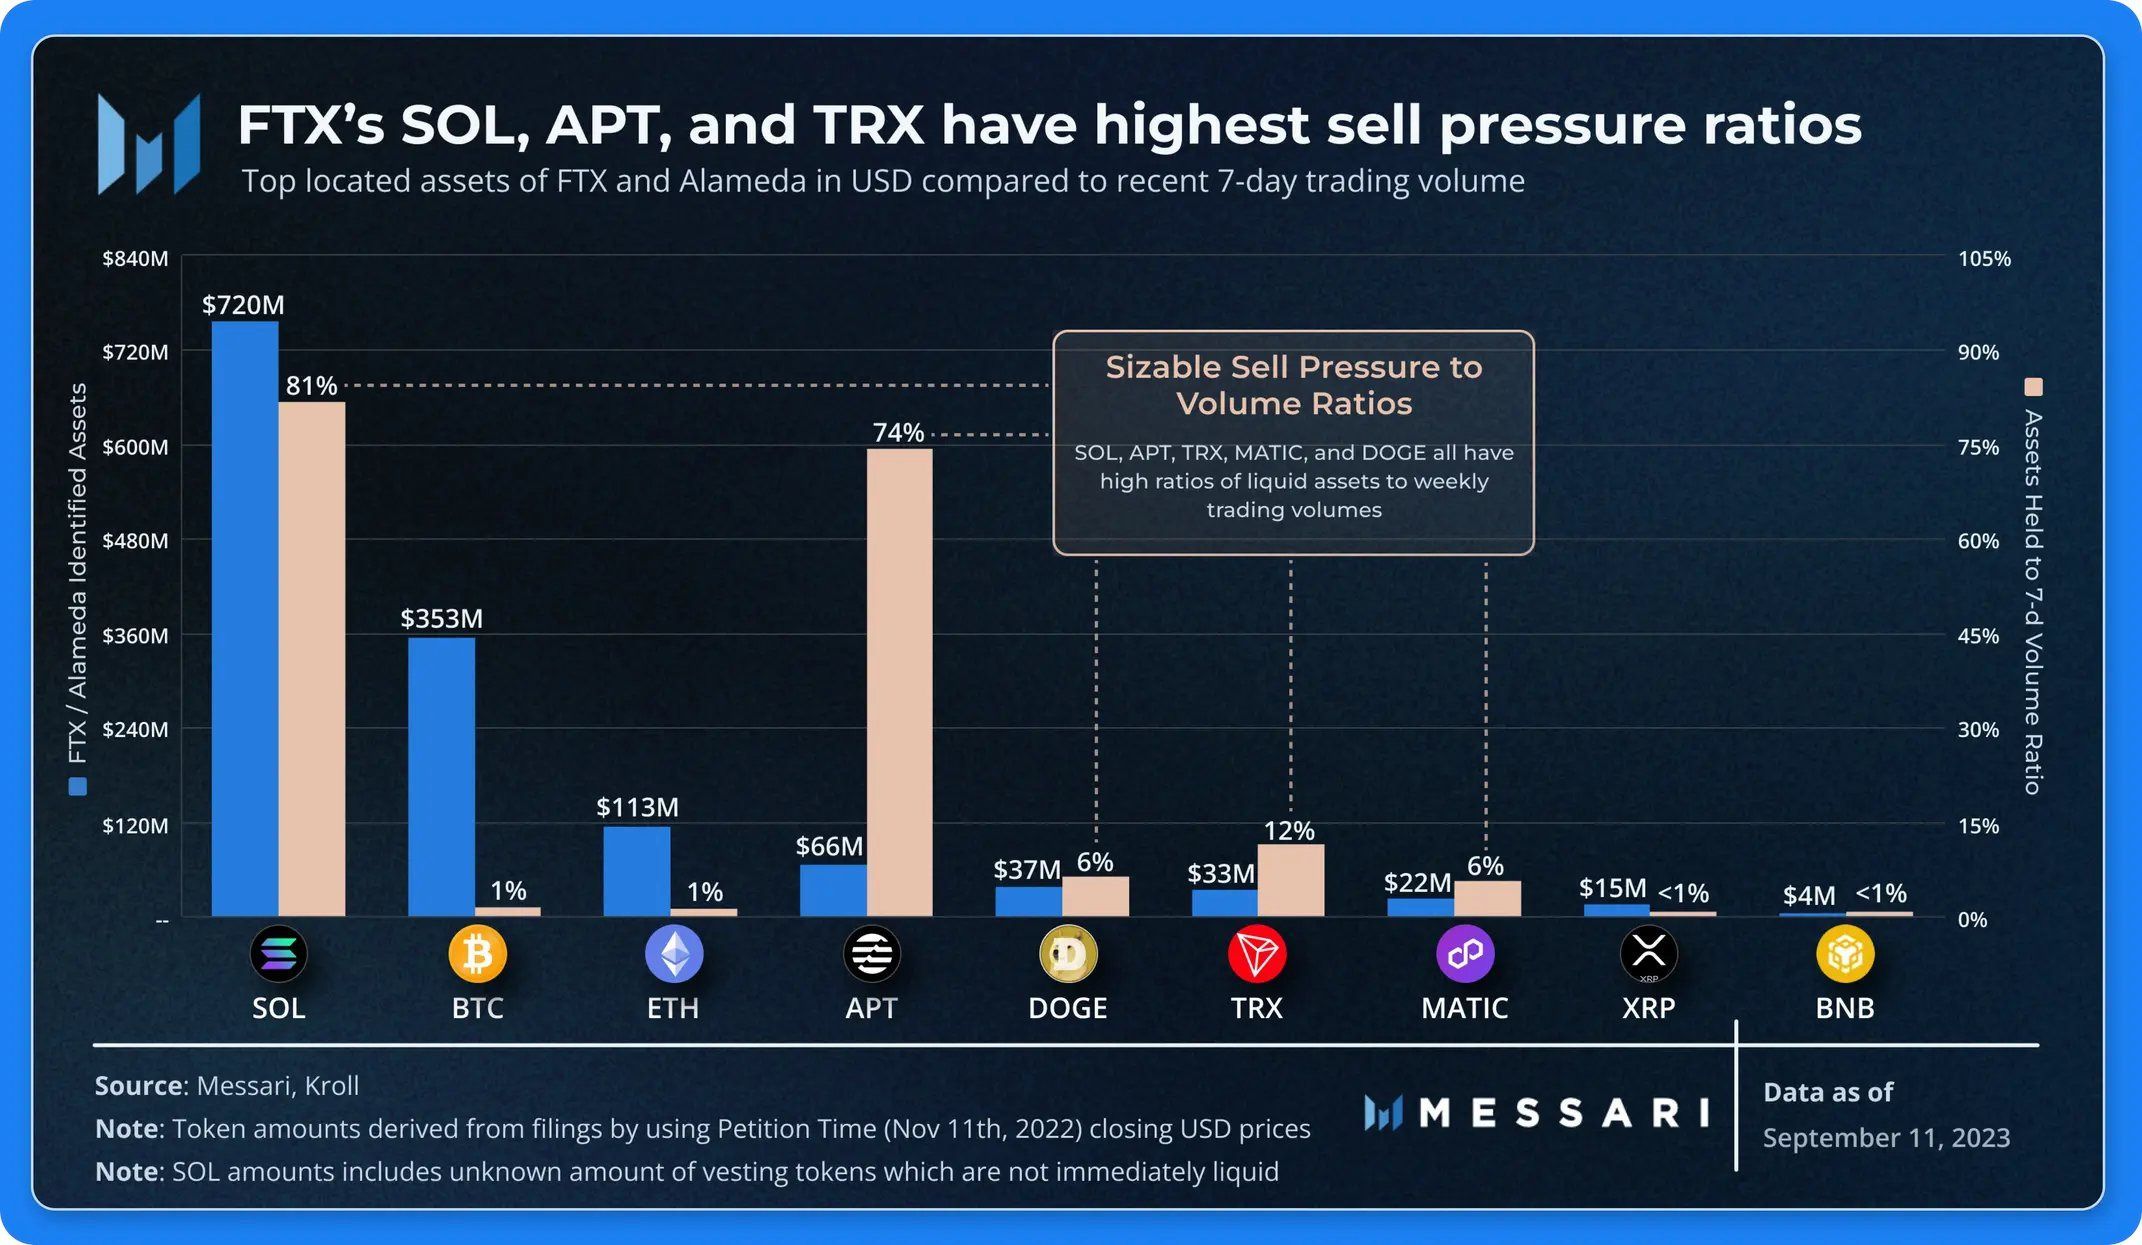 sell pressure ratios